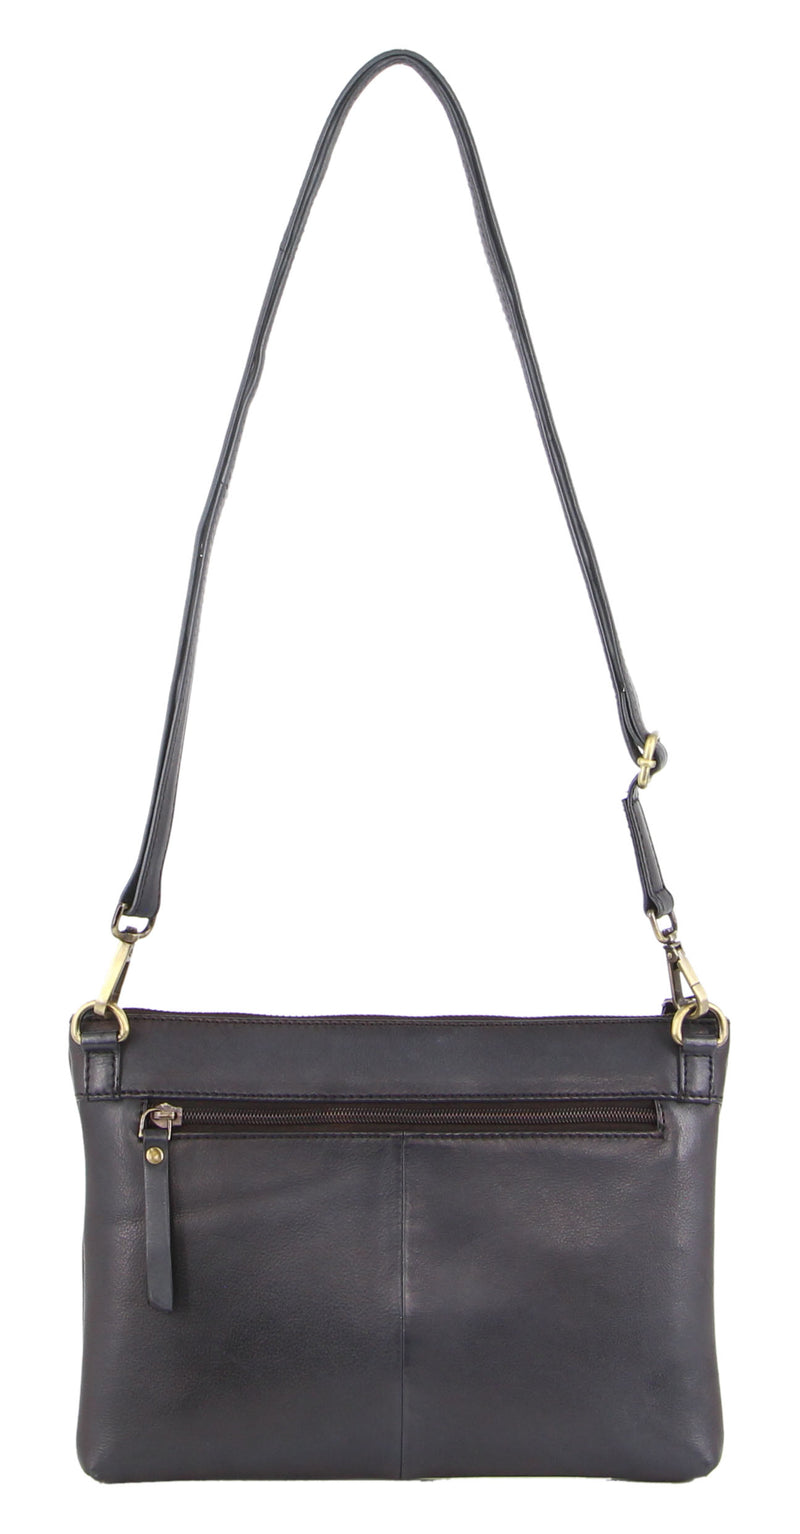 Pierre Cardin Vintage Leather Multiway Crossbody Bag/Clutch